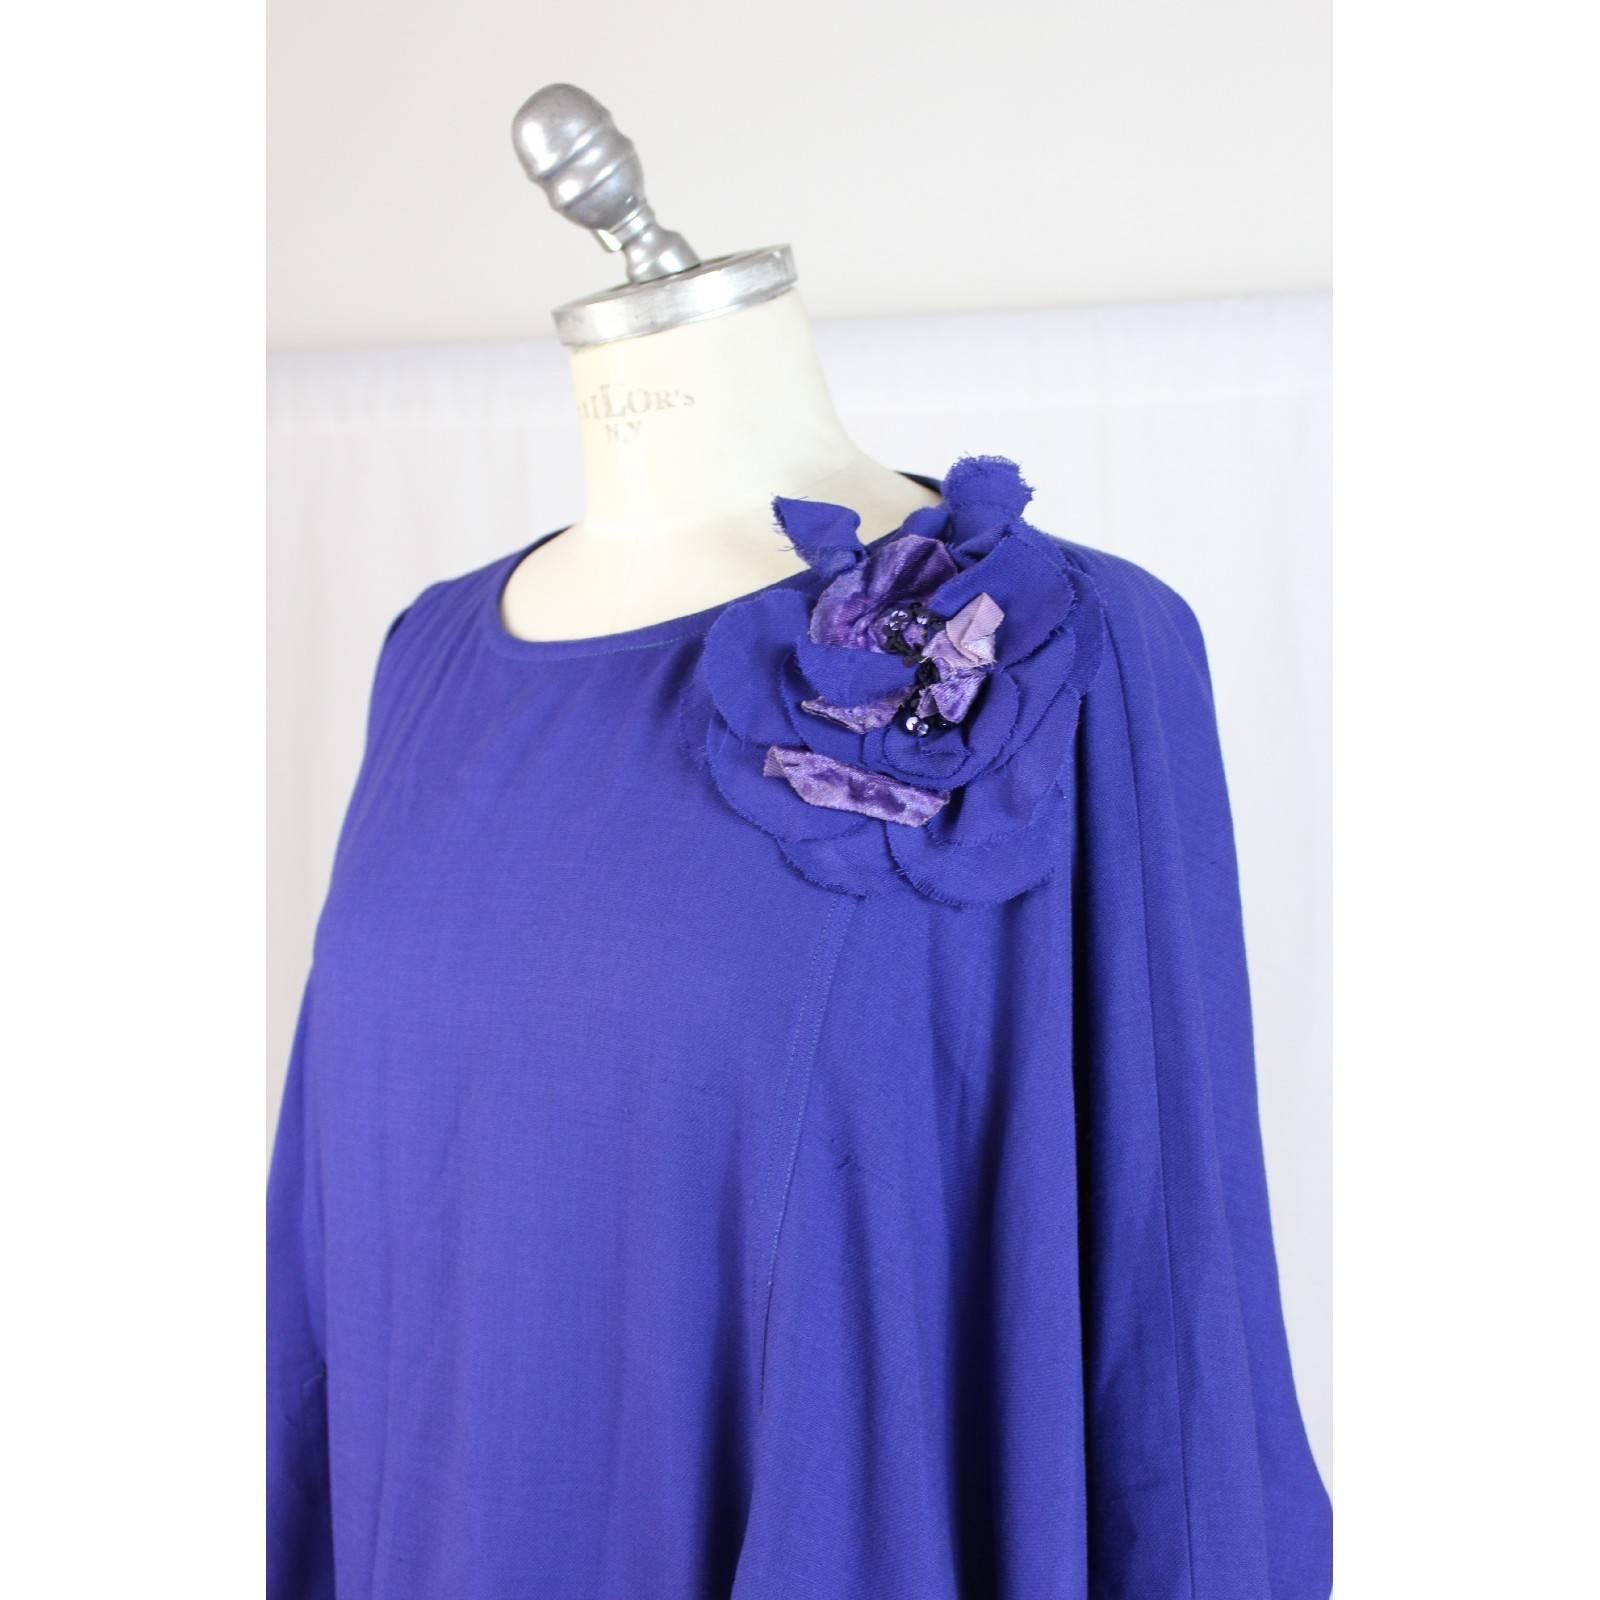 Blue Nazareno Gabrielli wool blue dress tunic flower size 42 women’s 1980s vintage